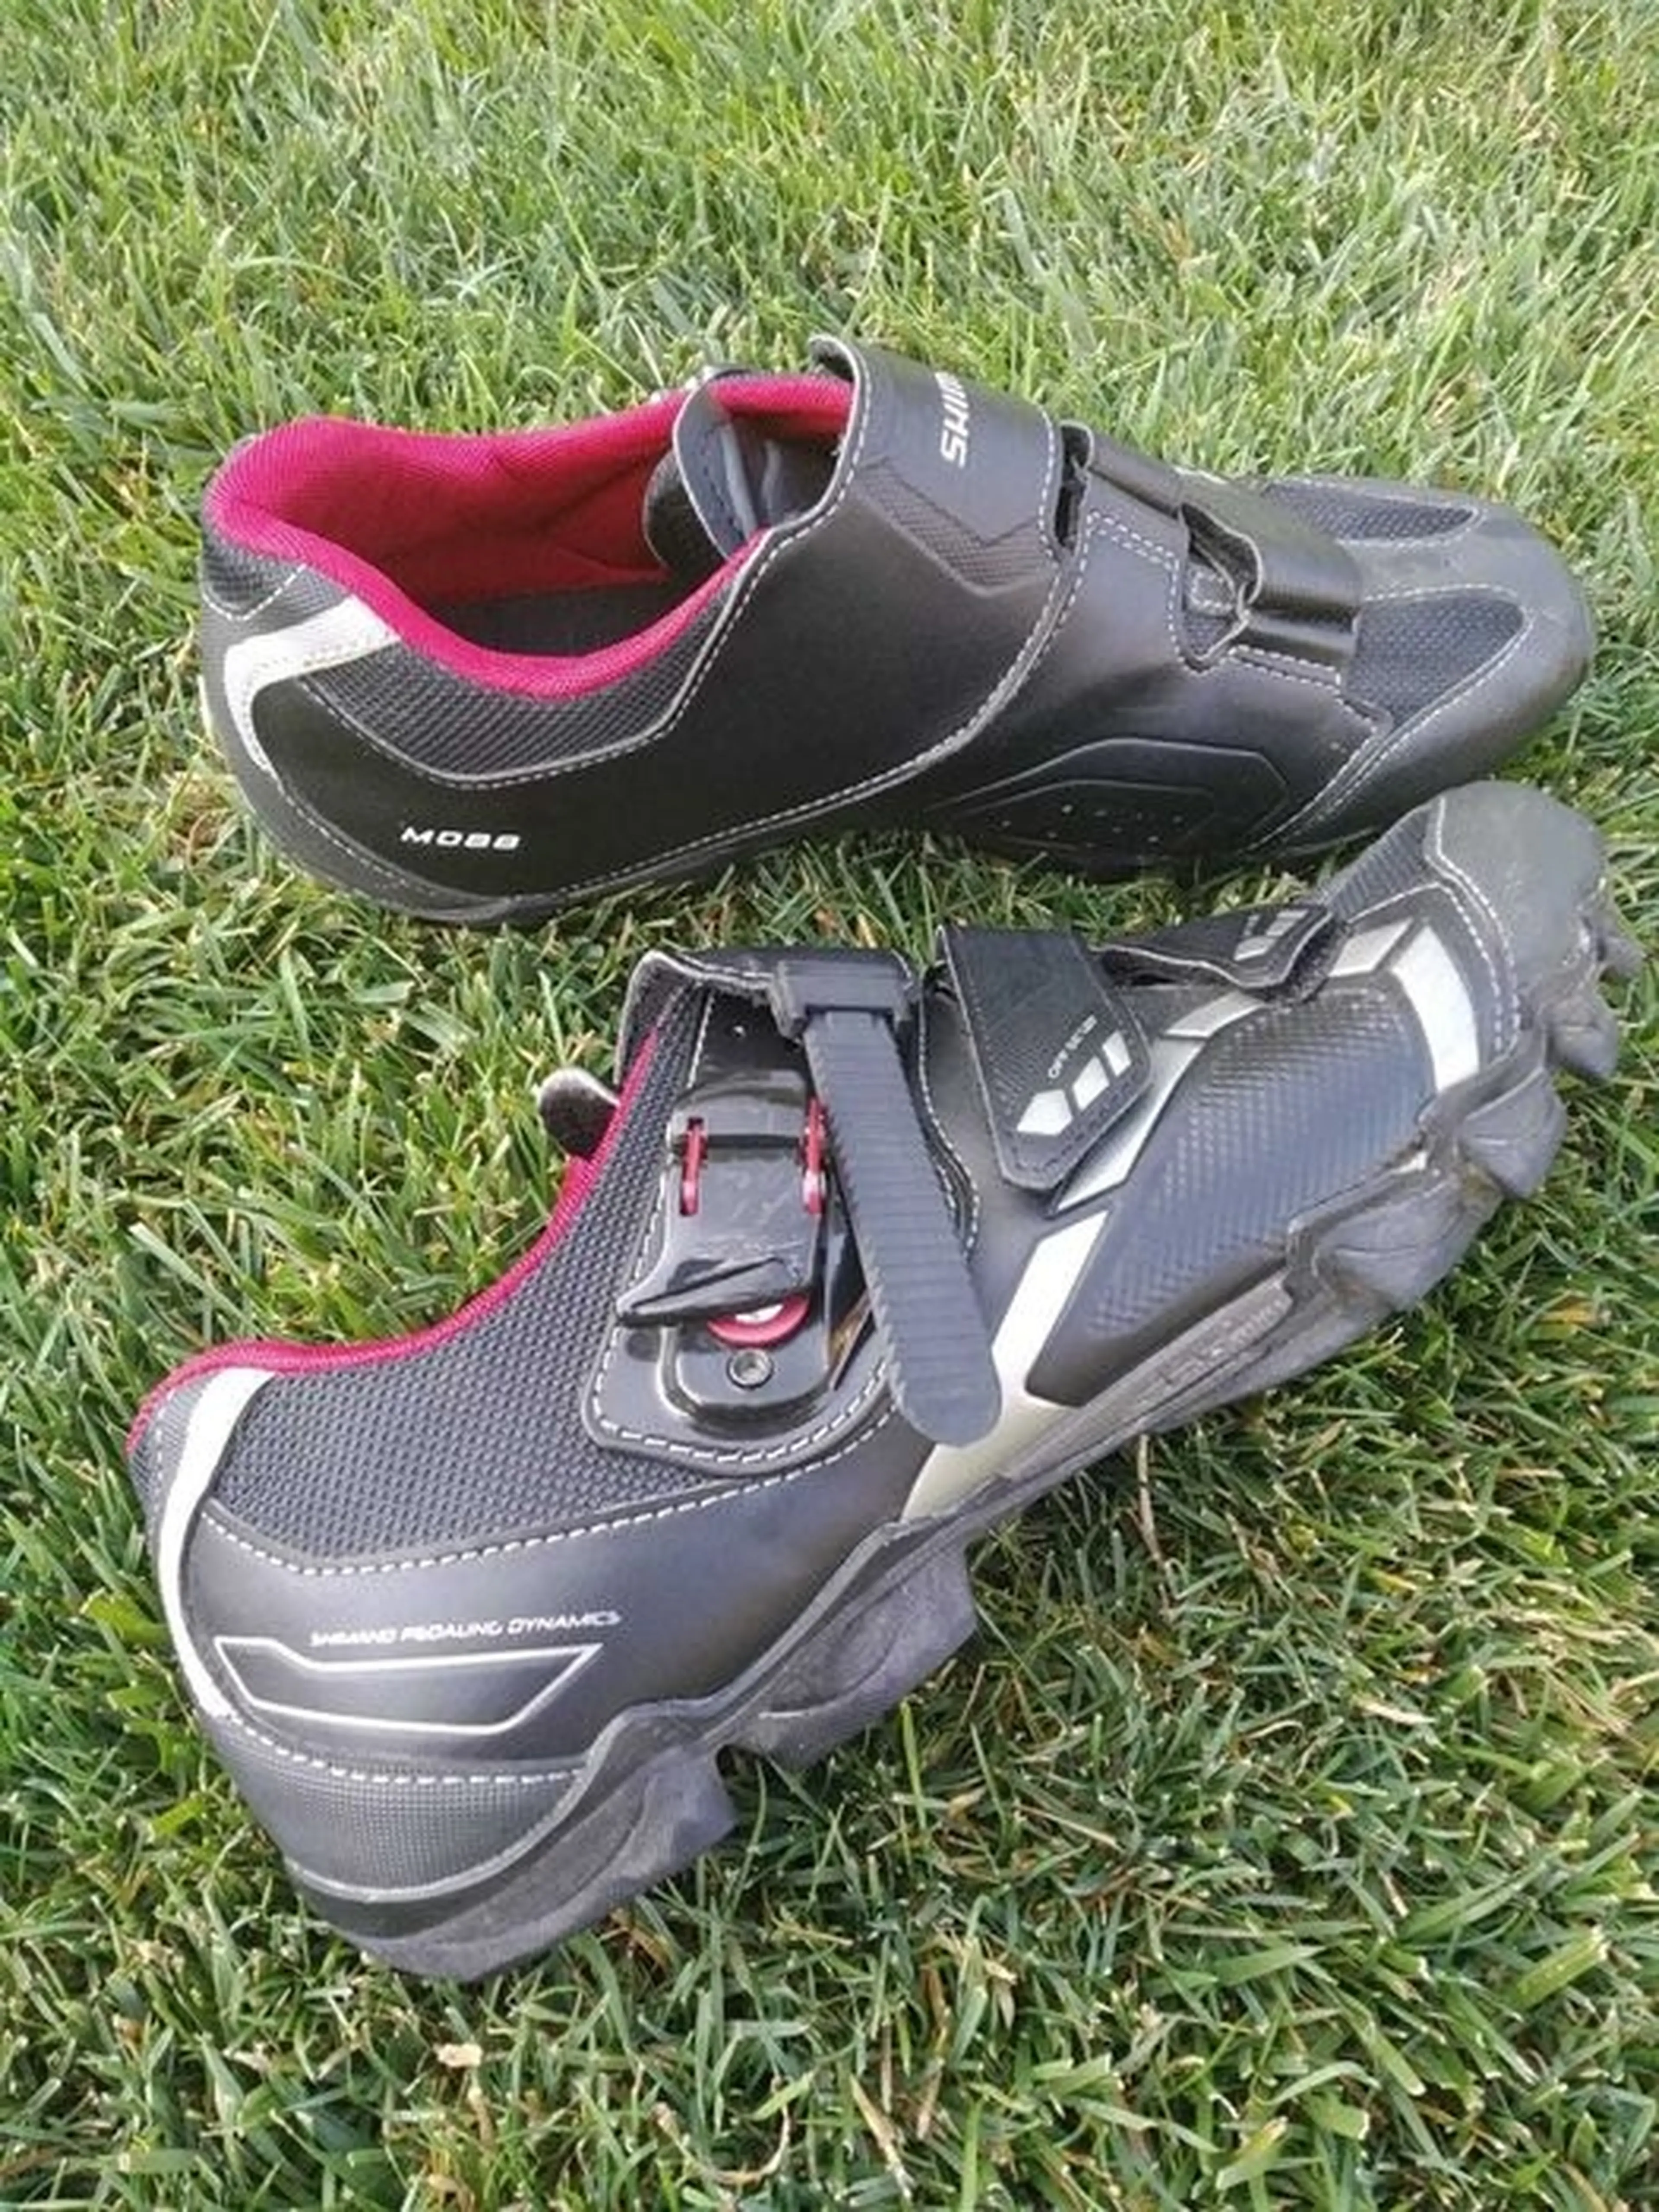 2. Vand pantofi Shimano MO88, pedale incluse